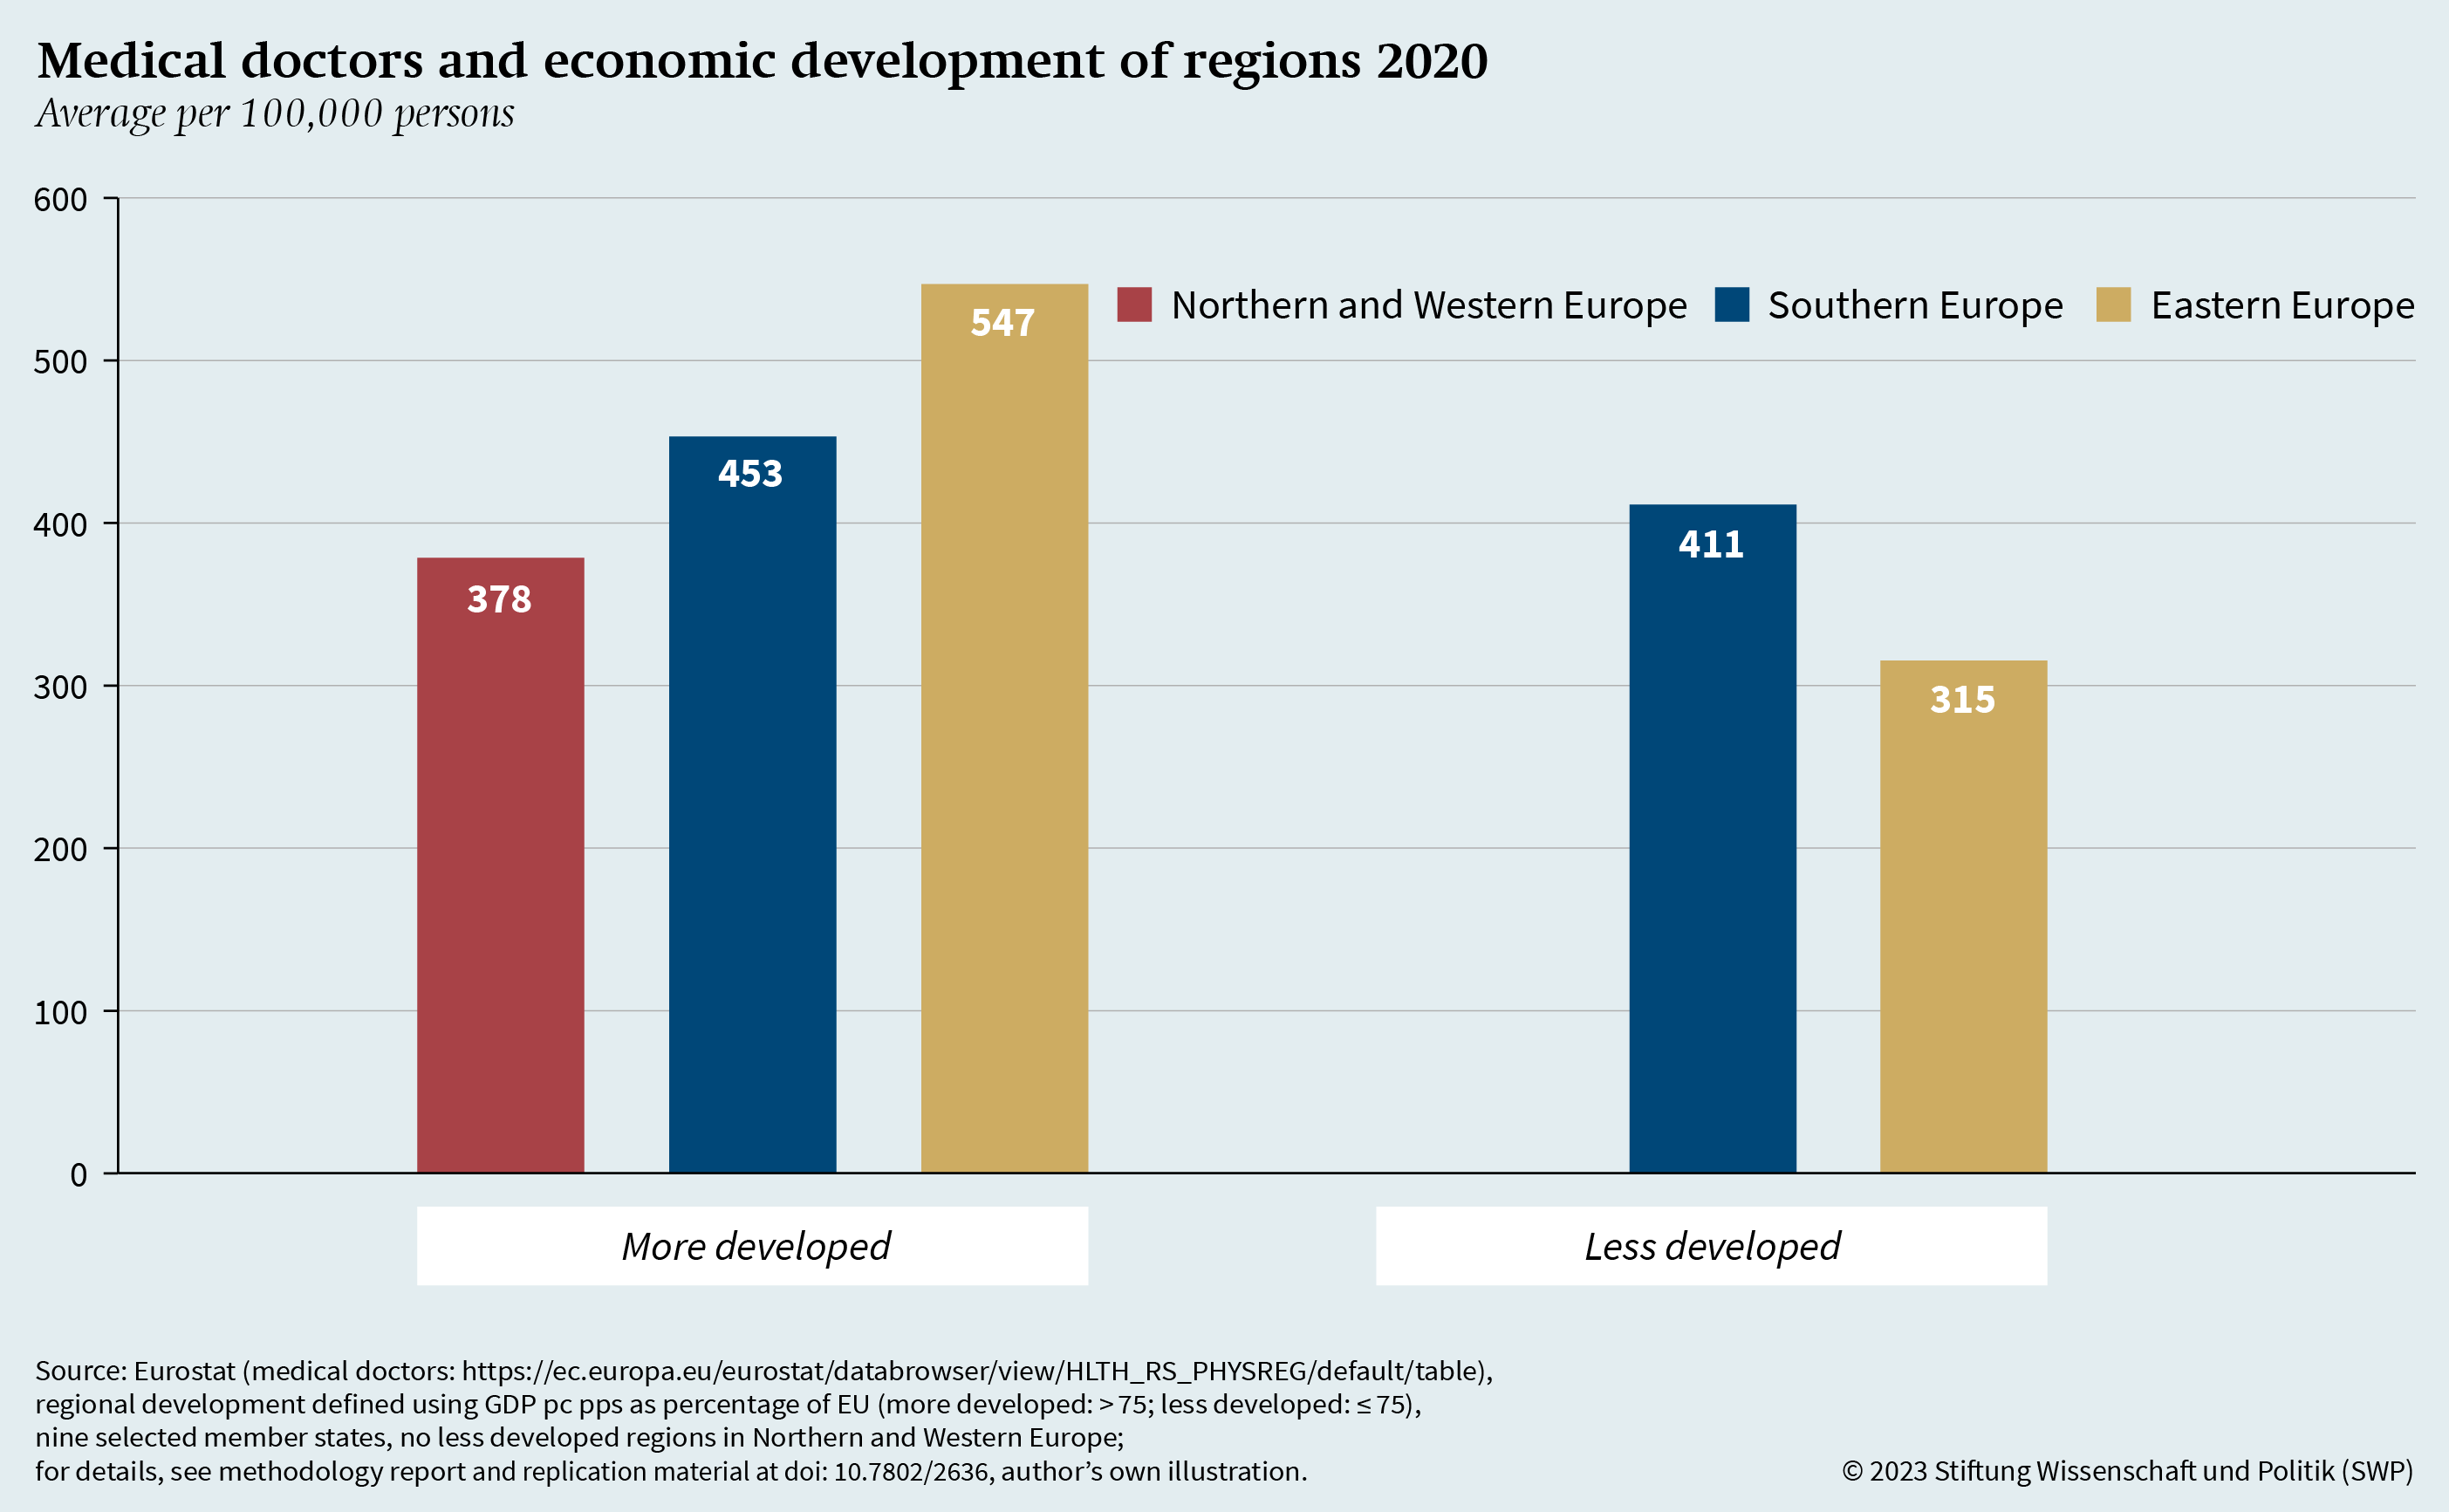 Figure 7: Medical doctors and economic development of regions 2020